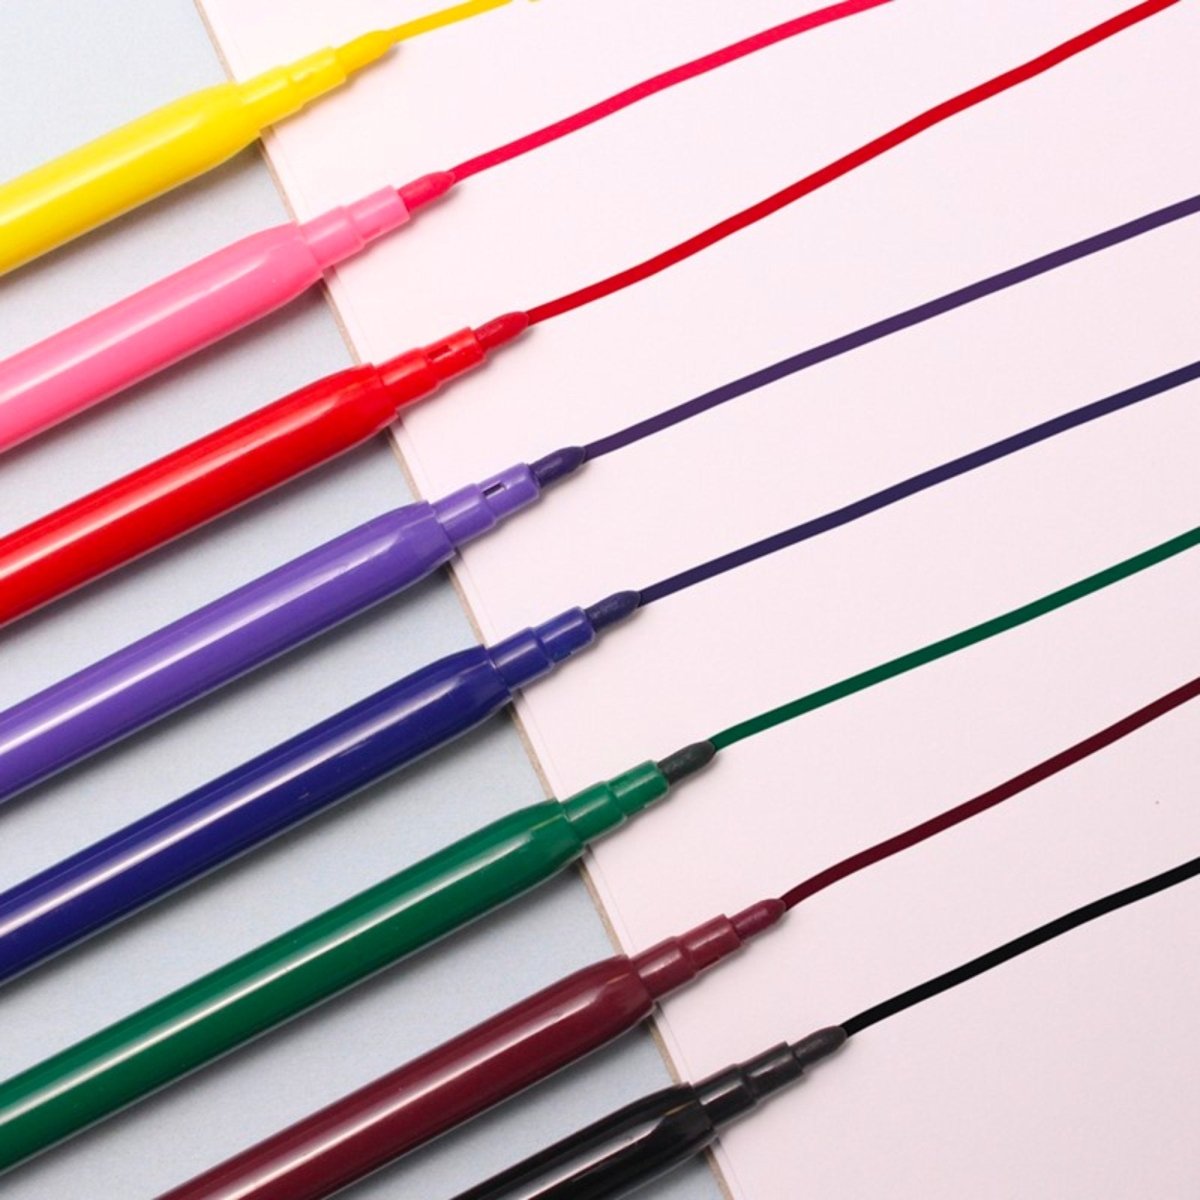 8 Fibre Colouring Pens Set - Kids Party Craft